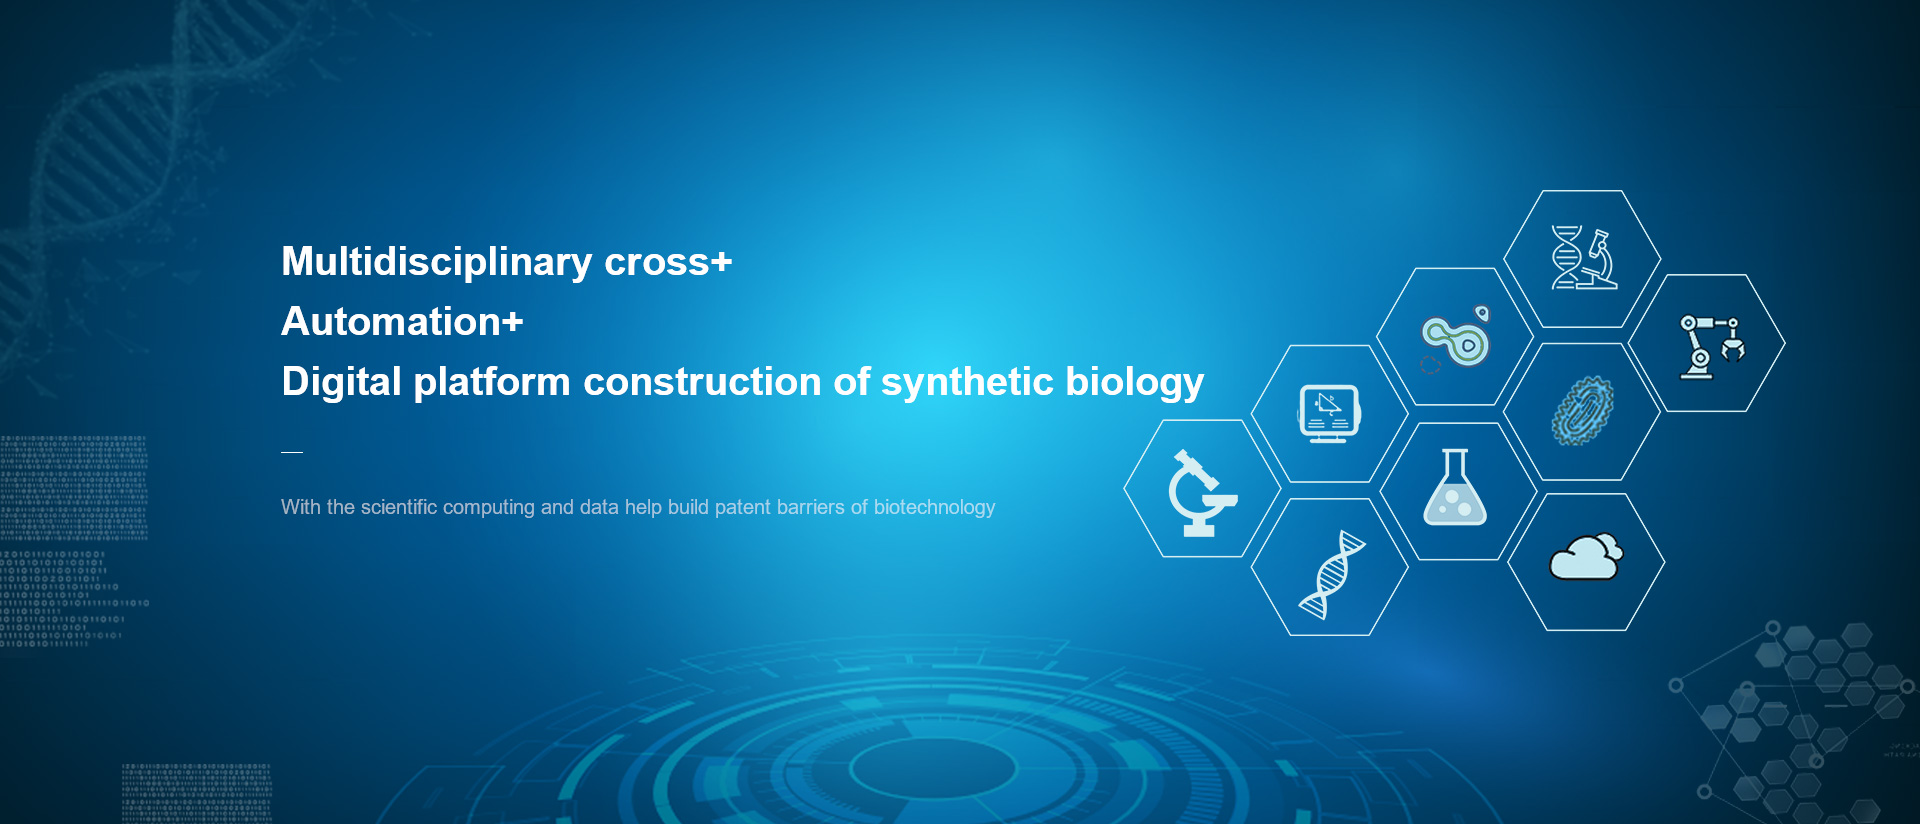 Leadsynbio digital platform construction of synthetic biology